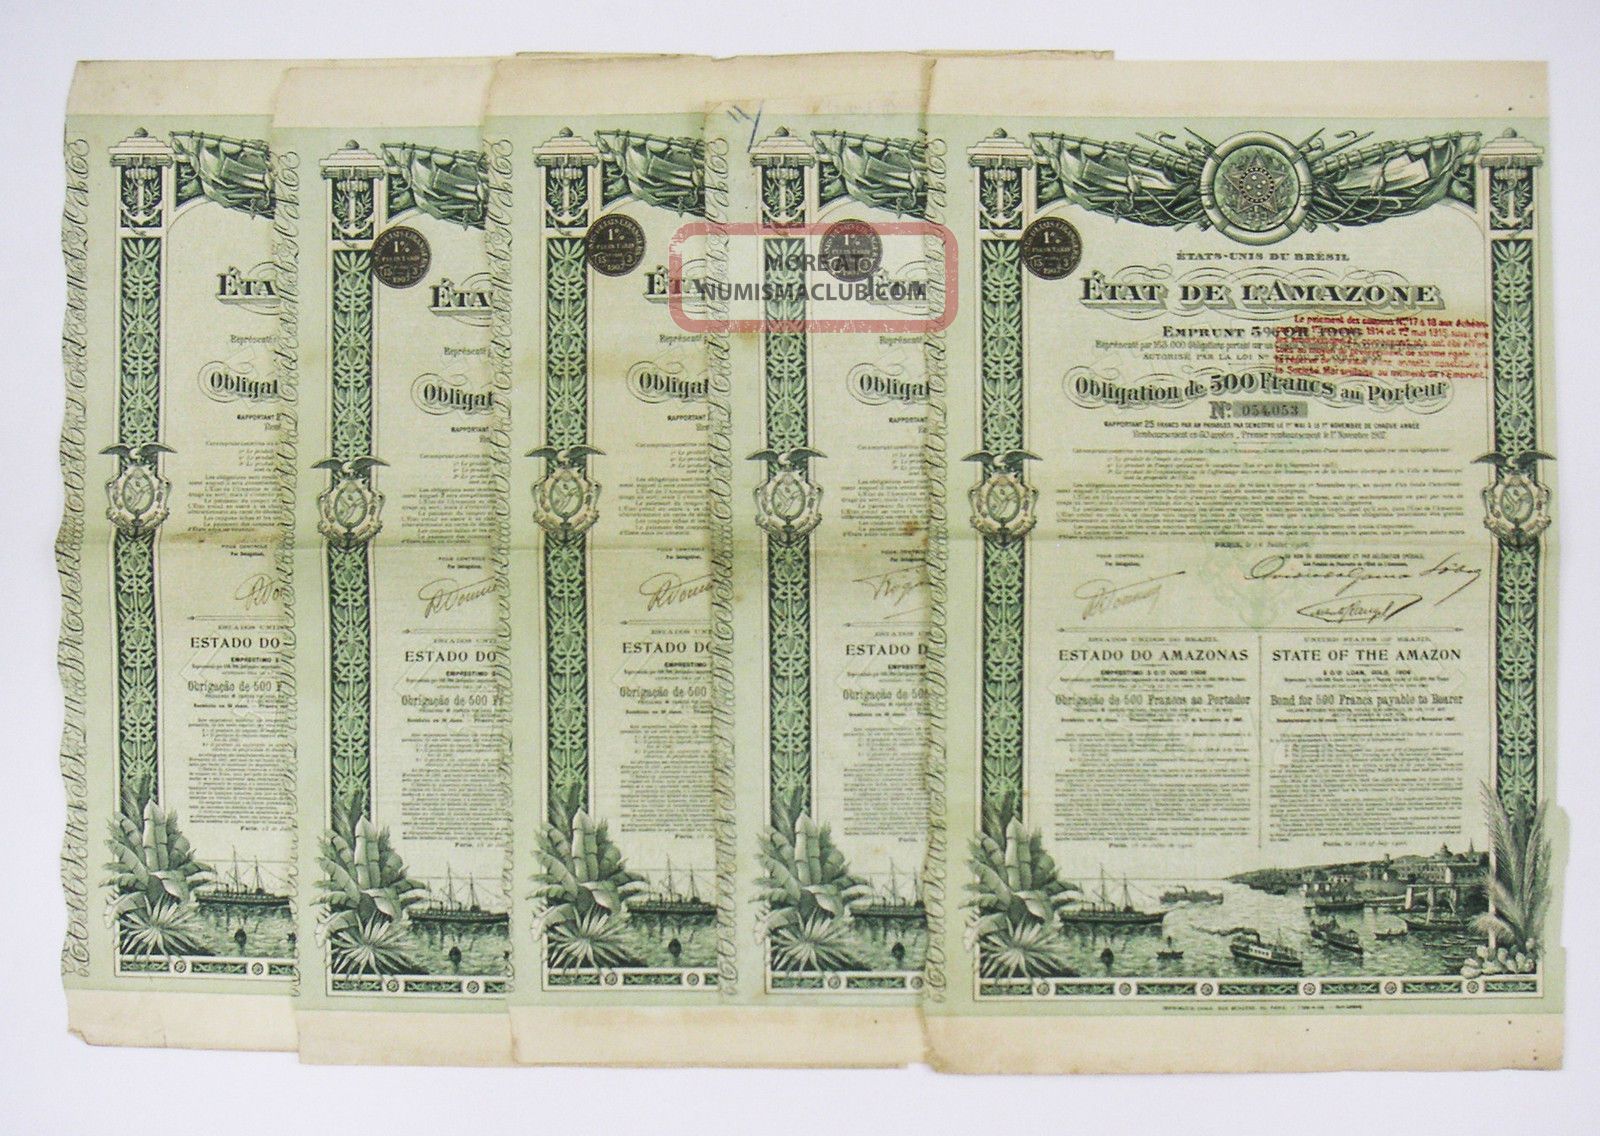 Brazil - Etat De L ' Amazone Emprunt 5 Or 1906 Ob.  500f (x5) Stocks & Bonds, Scripophily photo